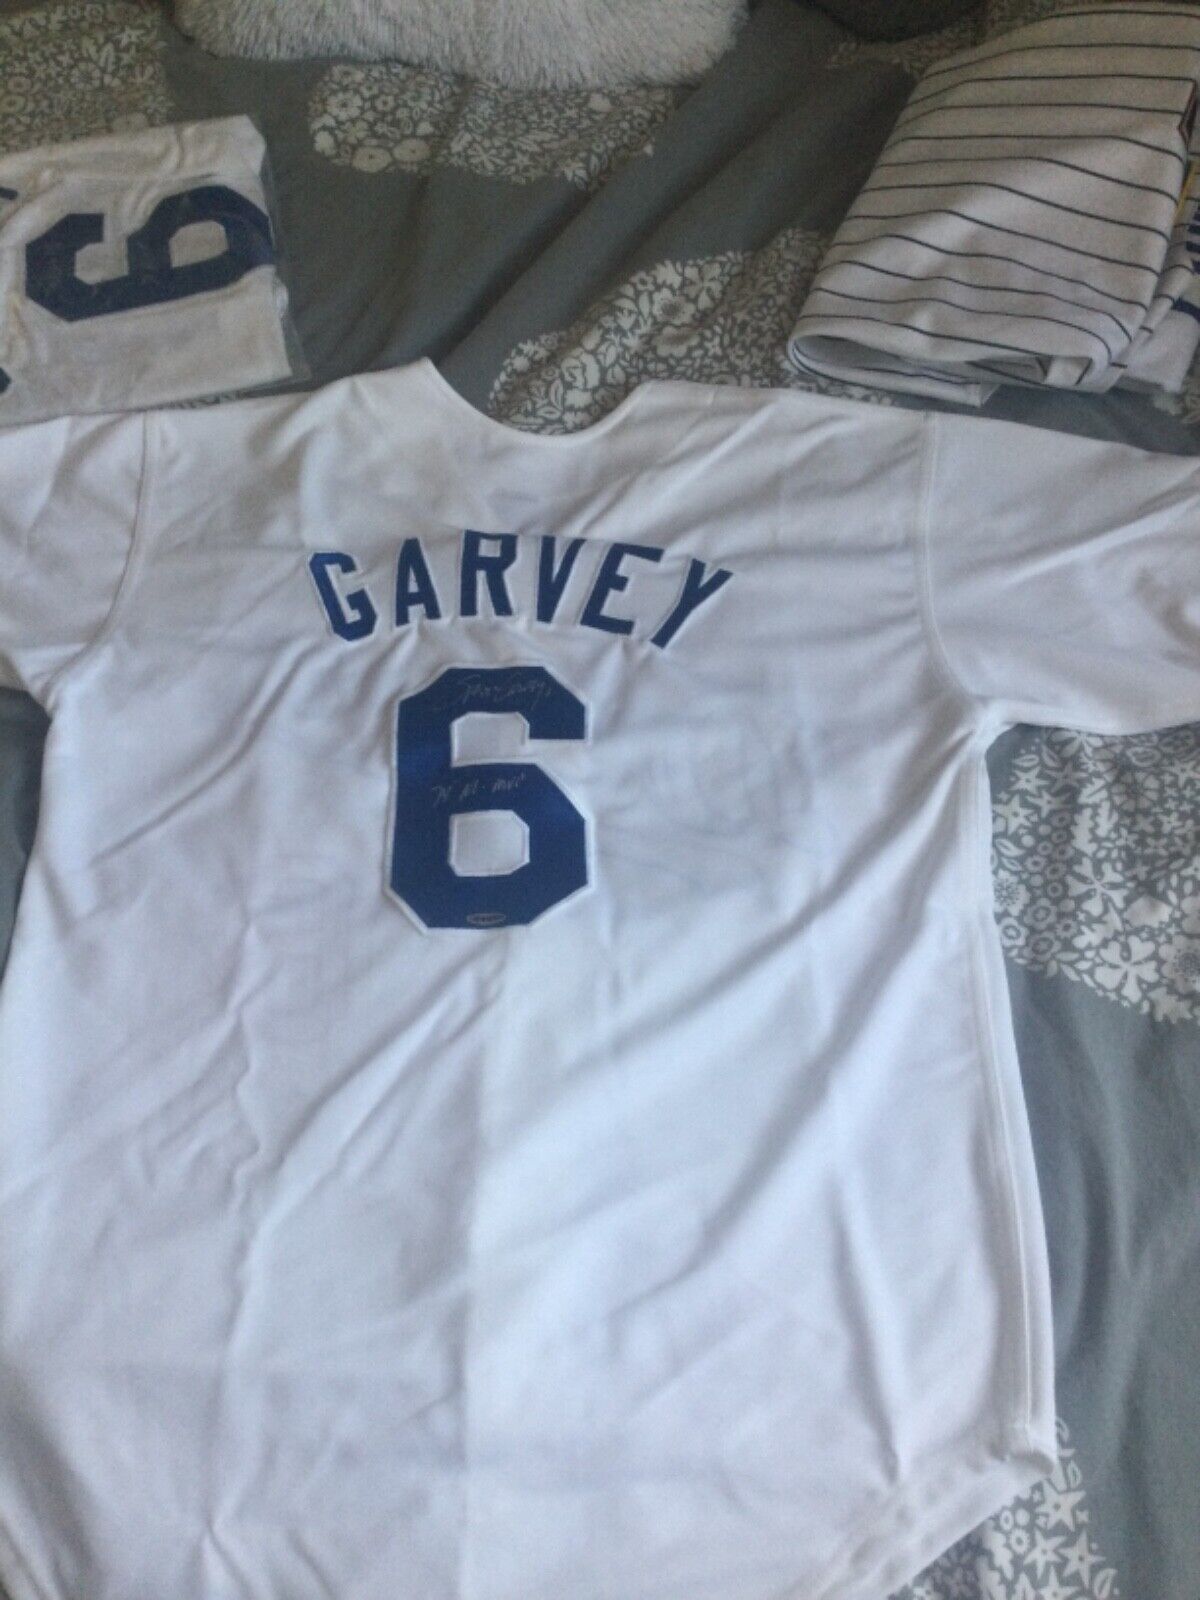 Steve Garvey Signed Los Angeles Dodgers Jersey 1974 NL MVP UDA White Home Jersey